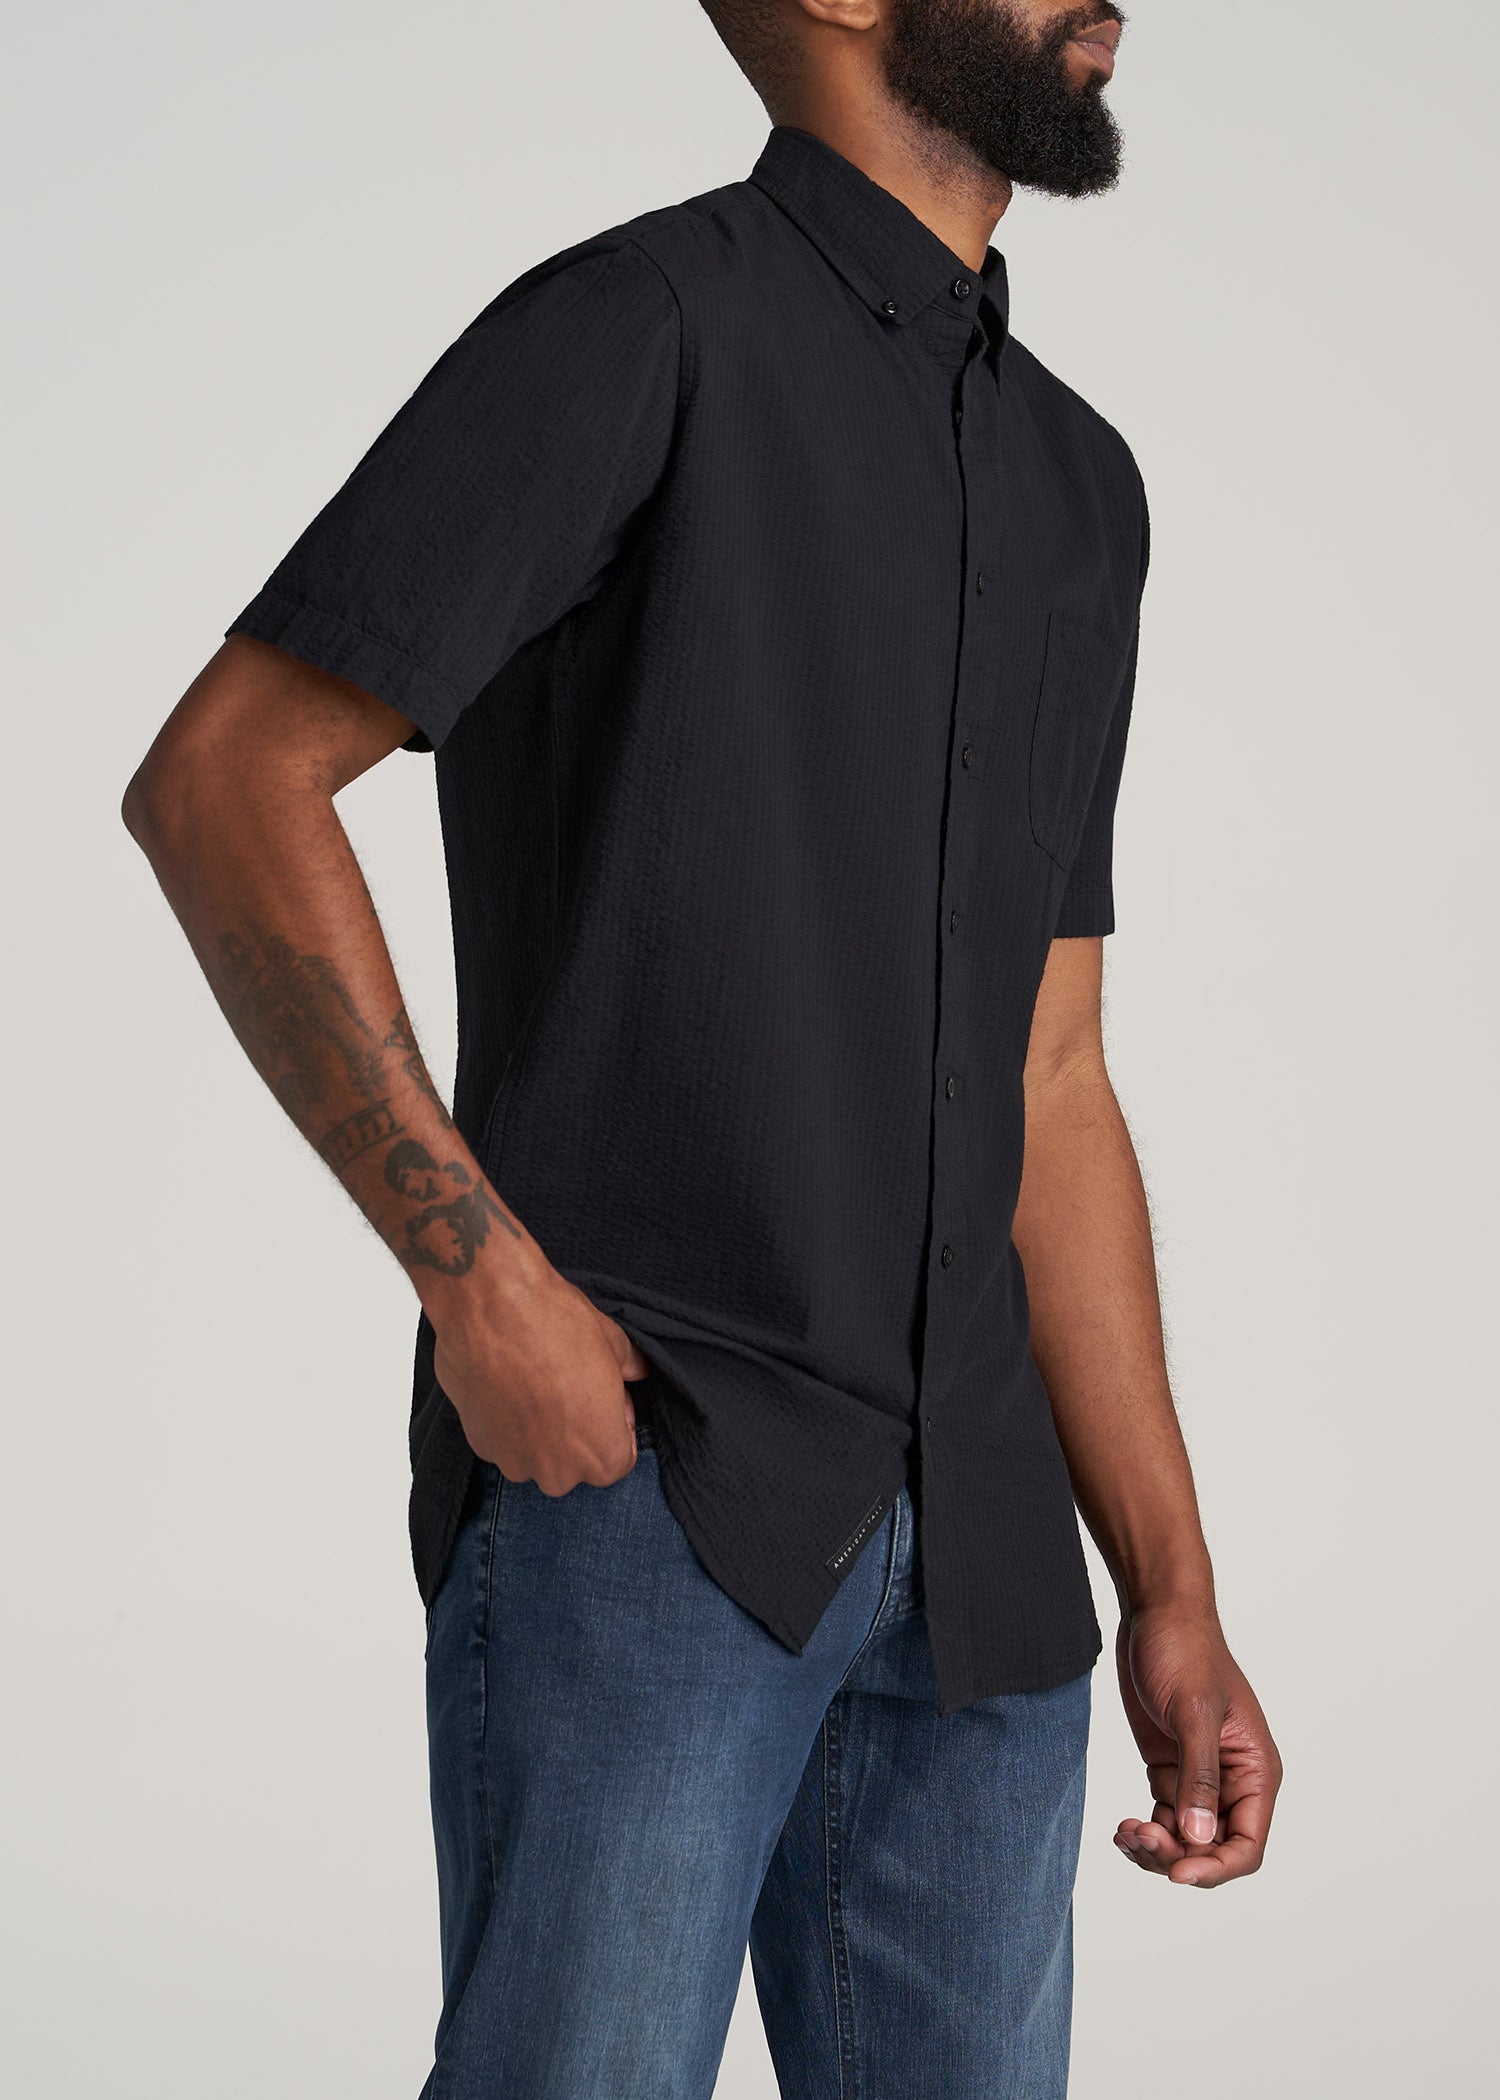 Seersucker Tall Men's Short Sleeve Shirt in Black